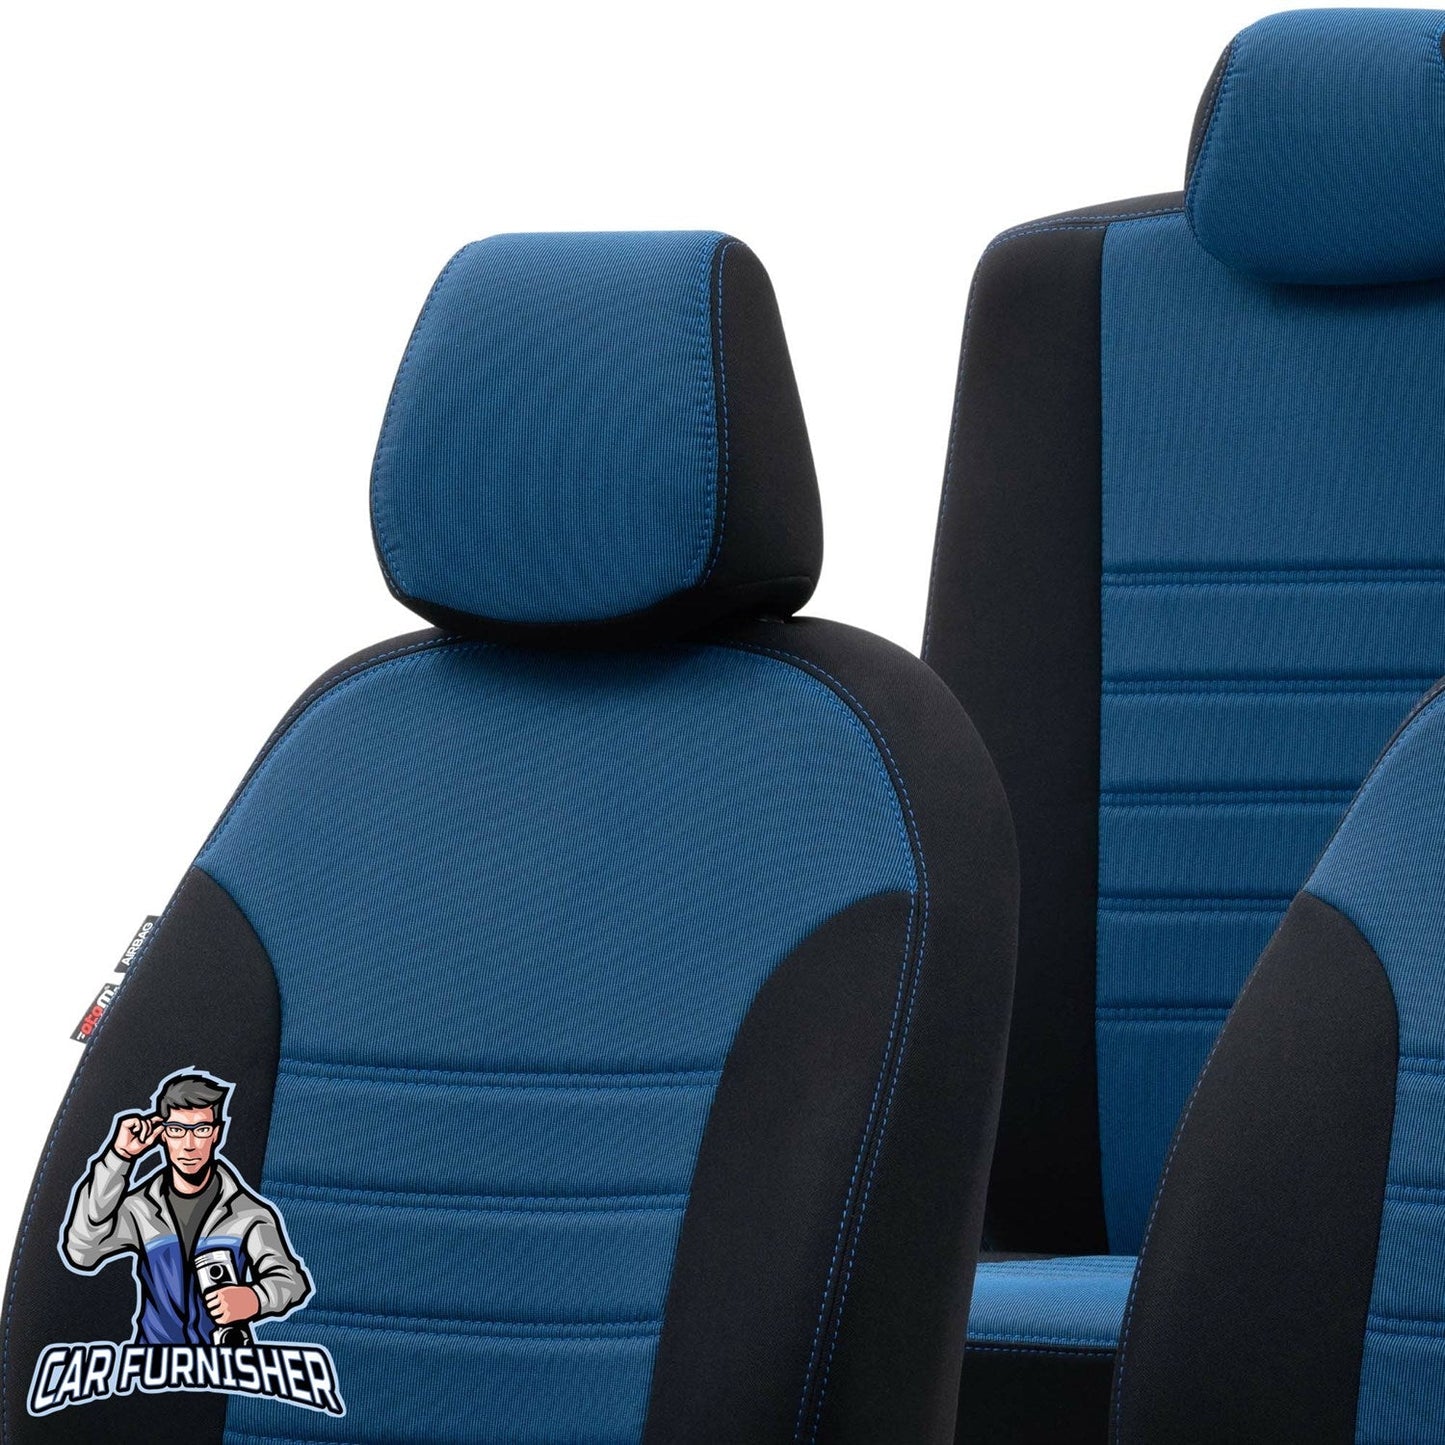 Kia Bongo Seat Covers Original Jacquard Design Blue Jacquard Fabric